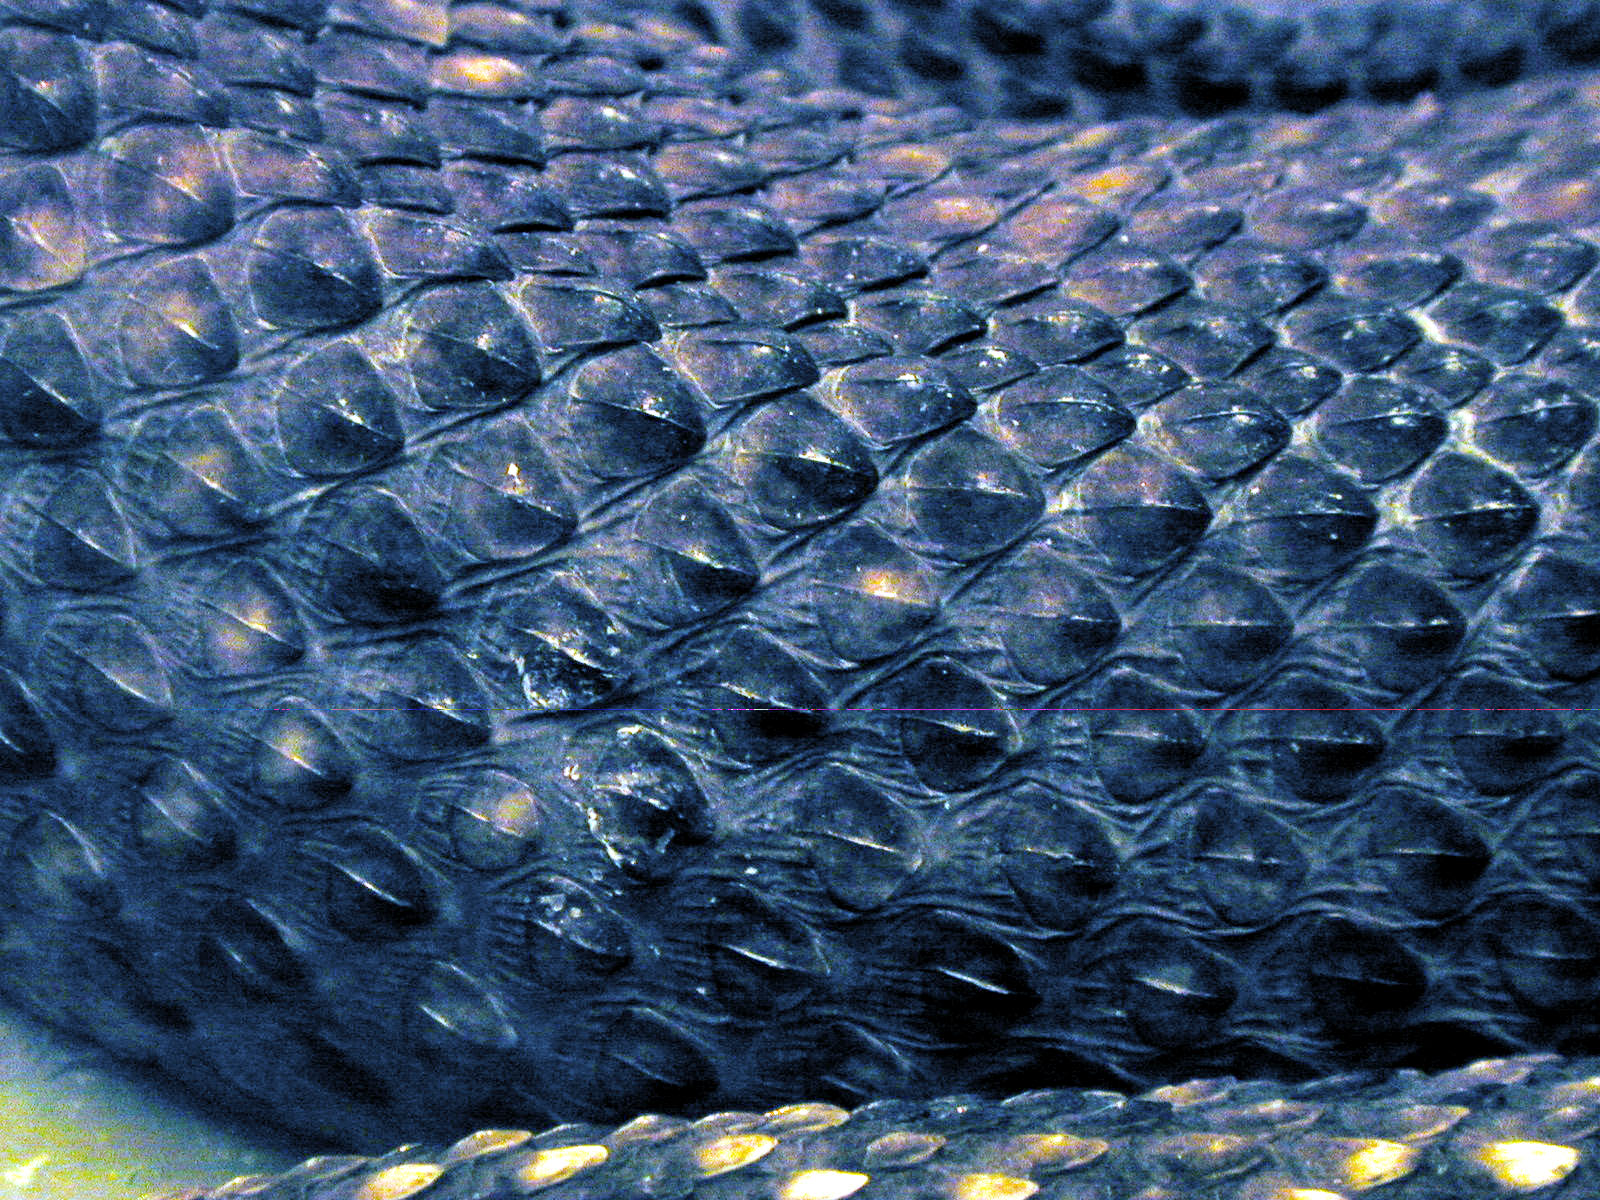 Snake Skin Wallpapers, Snake Skin Patterns Backgrounds, Snake Skin Textures